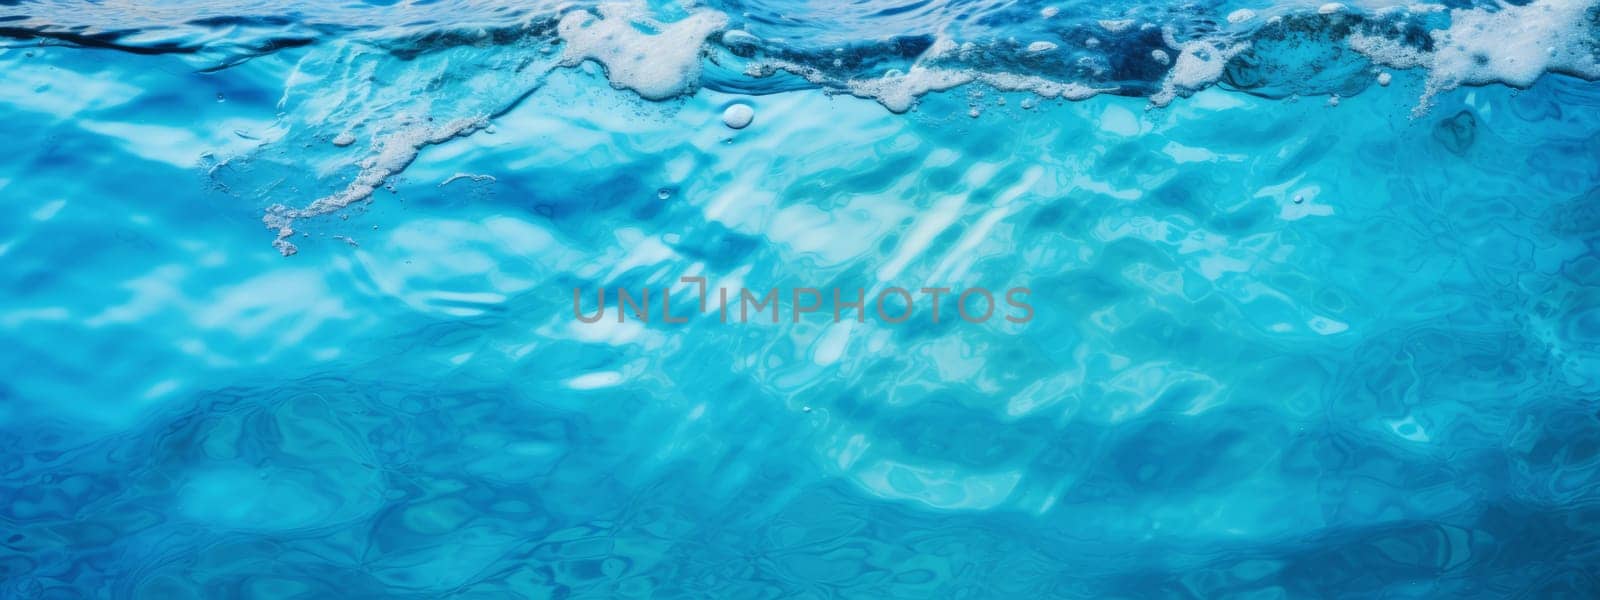 Underwater empty ocean or sea texture seamles background